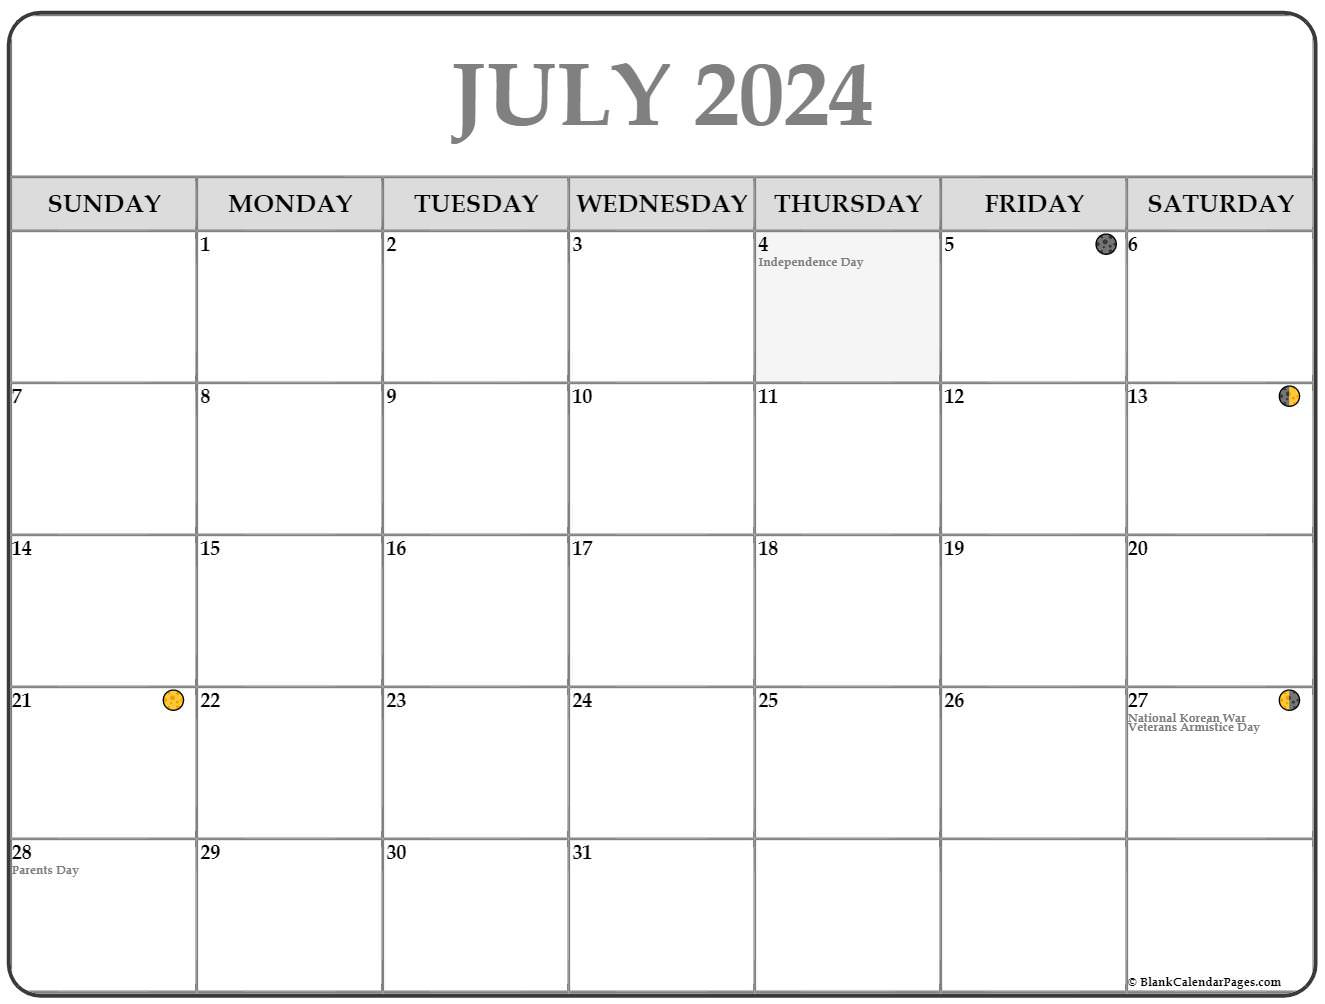 July 2024 Lunar Calendar | Moon Phase Calendar inside July 5Th Lunar Calendar 2024